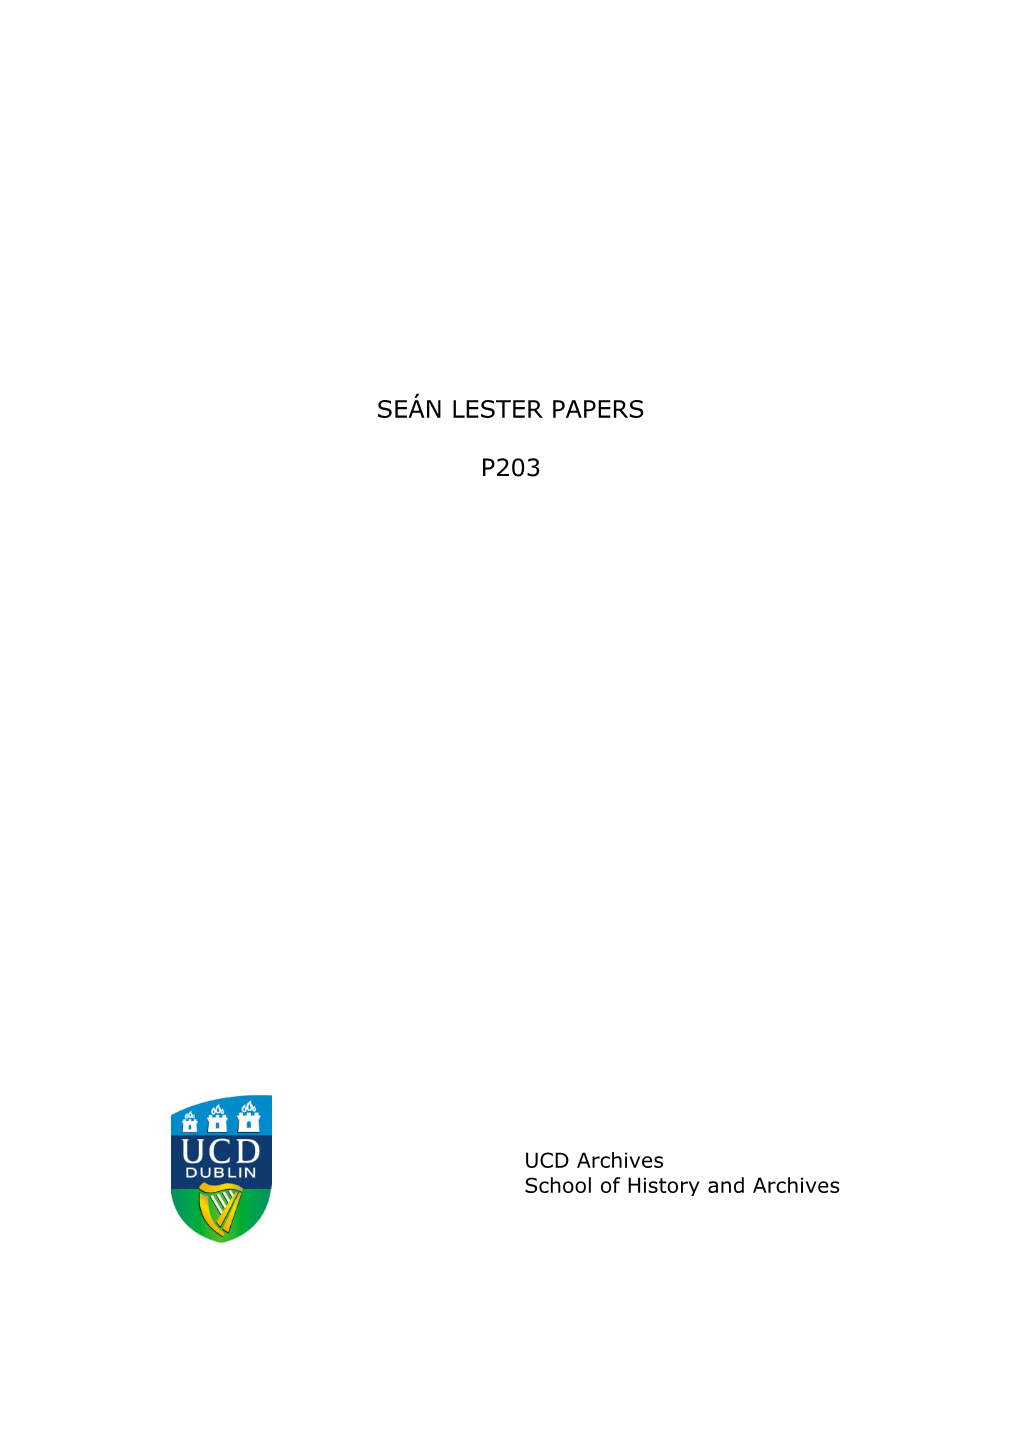 Seán Lester Papers P203